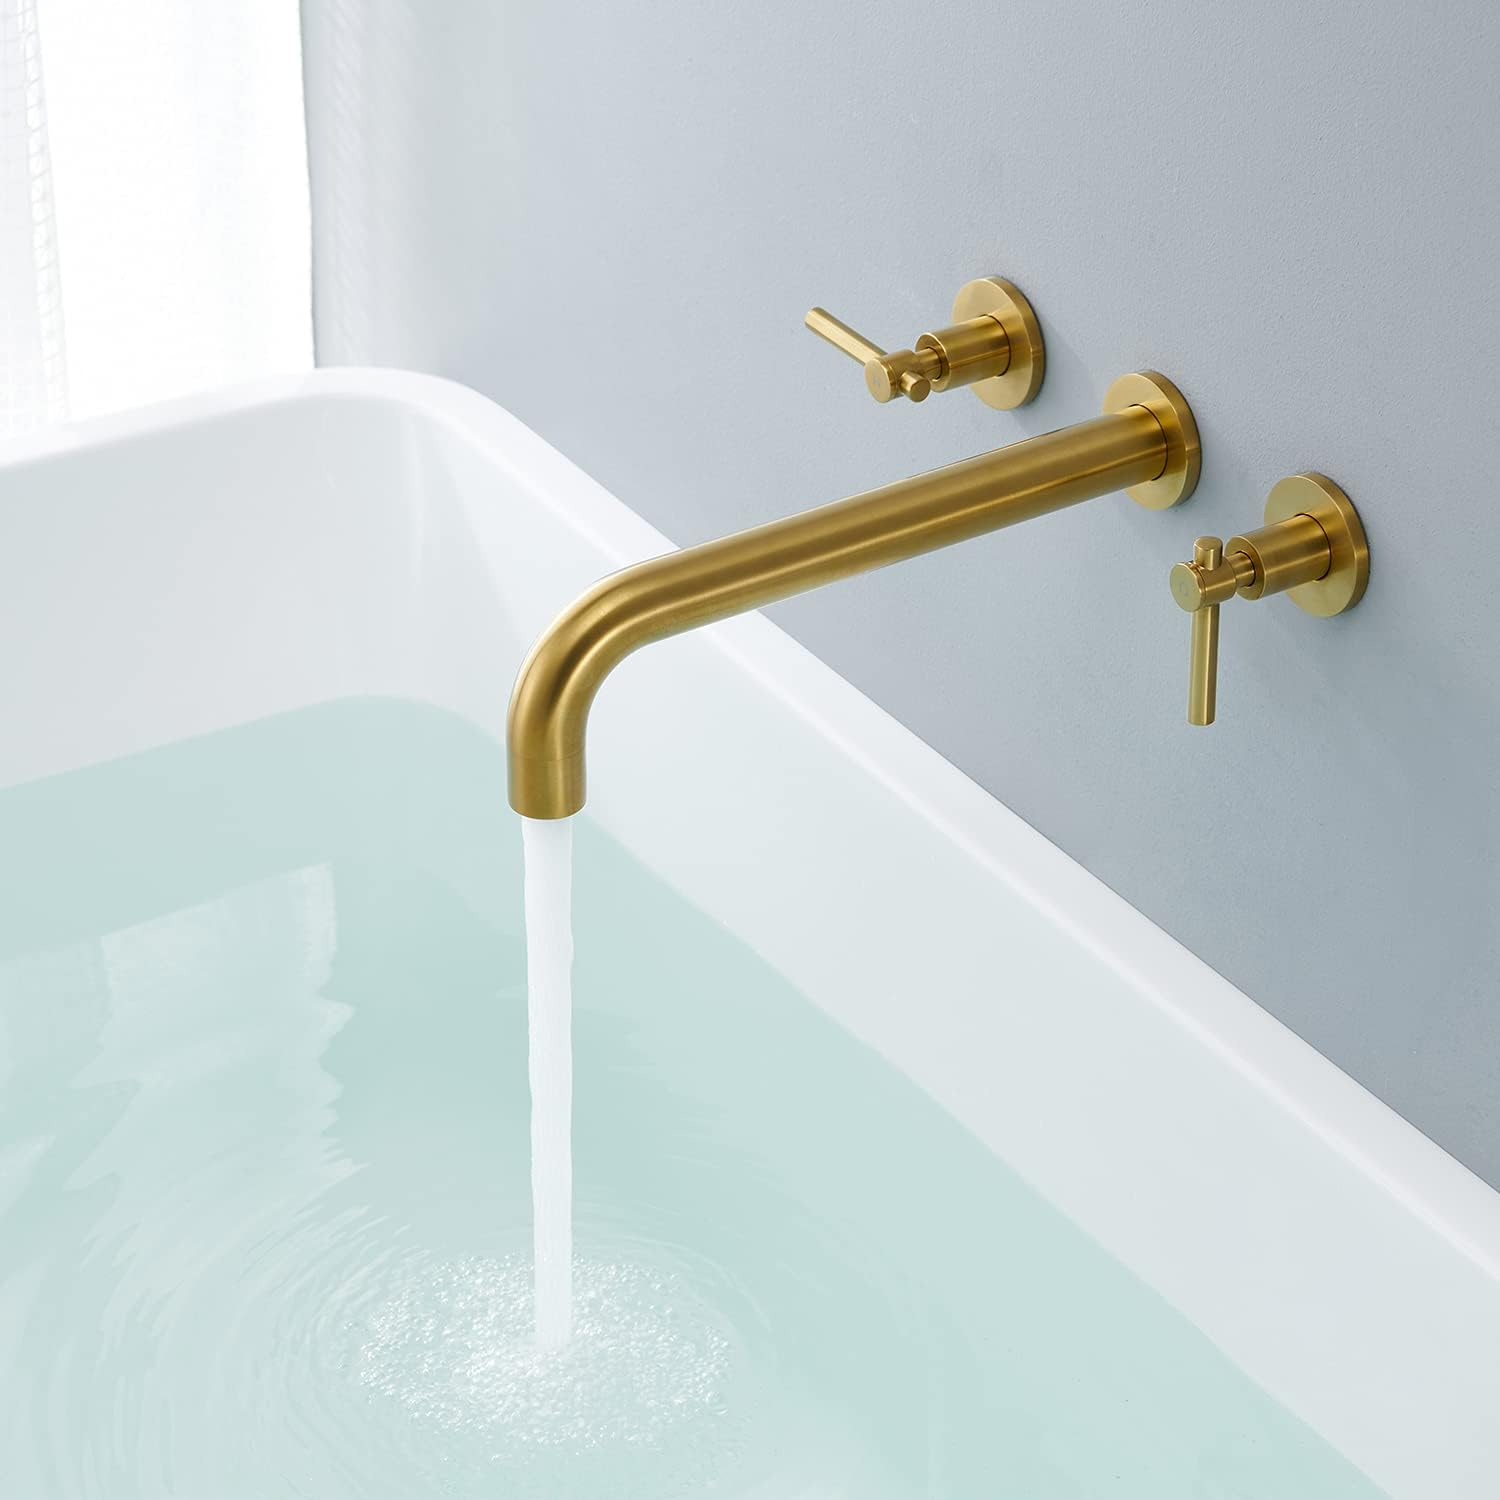 Wowkk Tub Filler Wall Mount Faucet in Brushed Gold